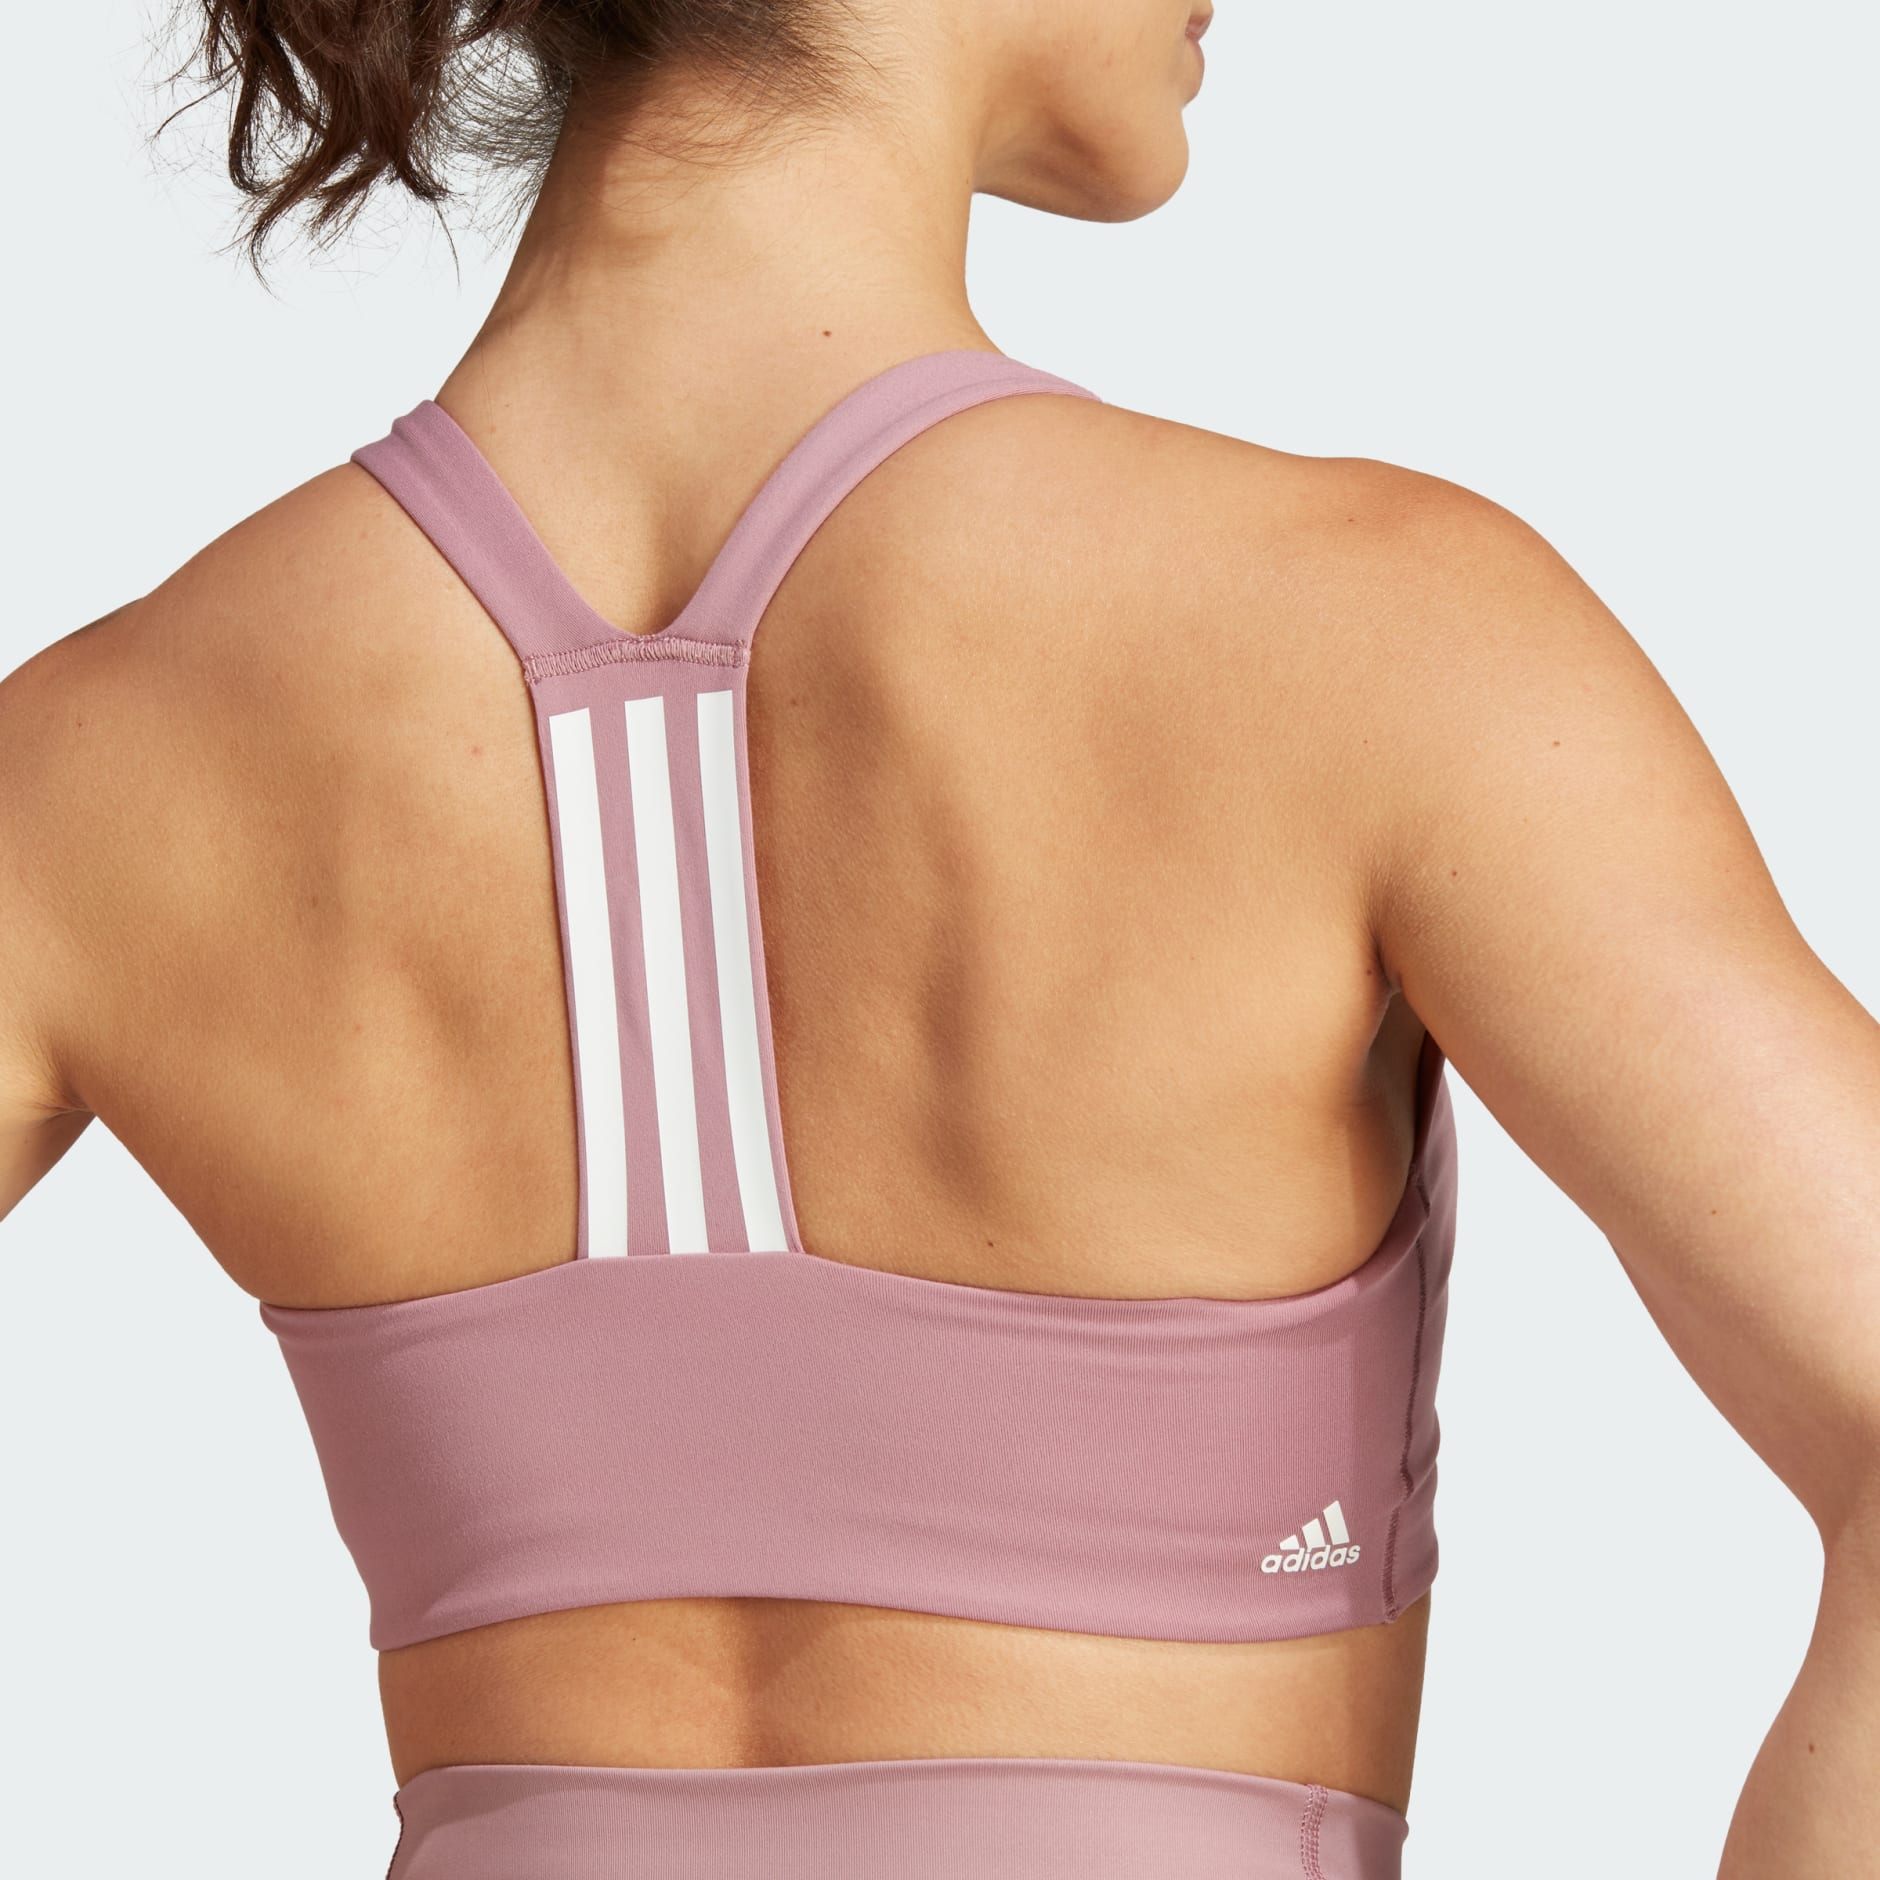 Adidas women's powerimpact medium support maternity bra